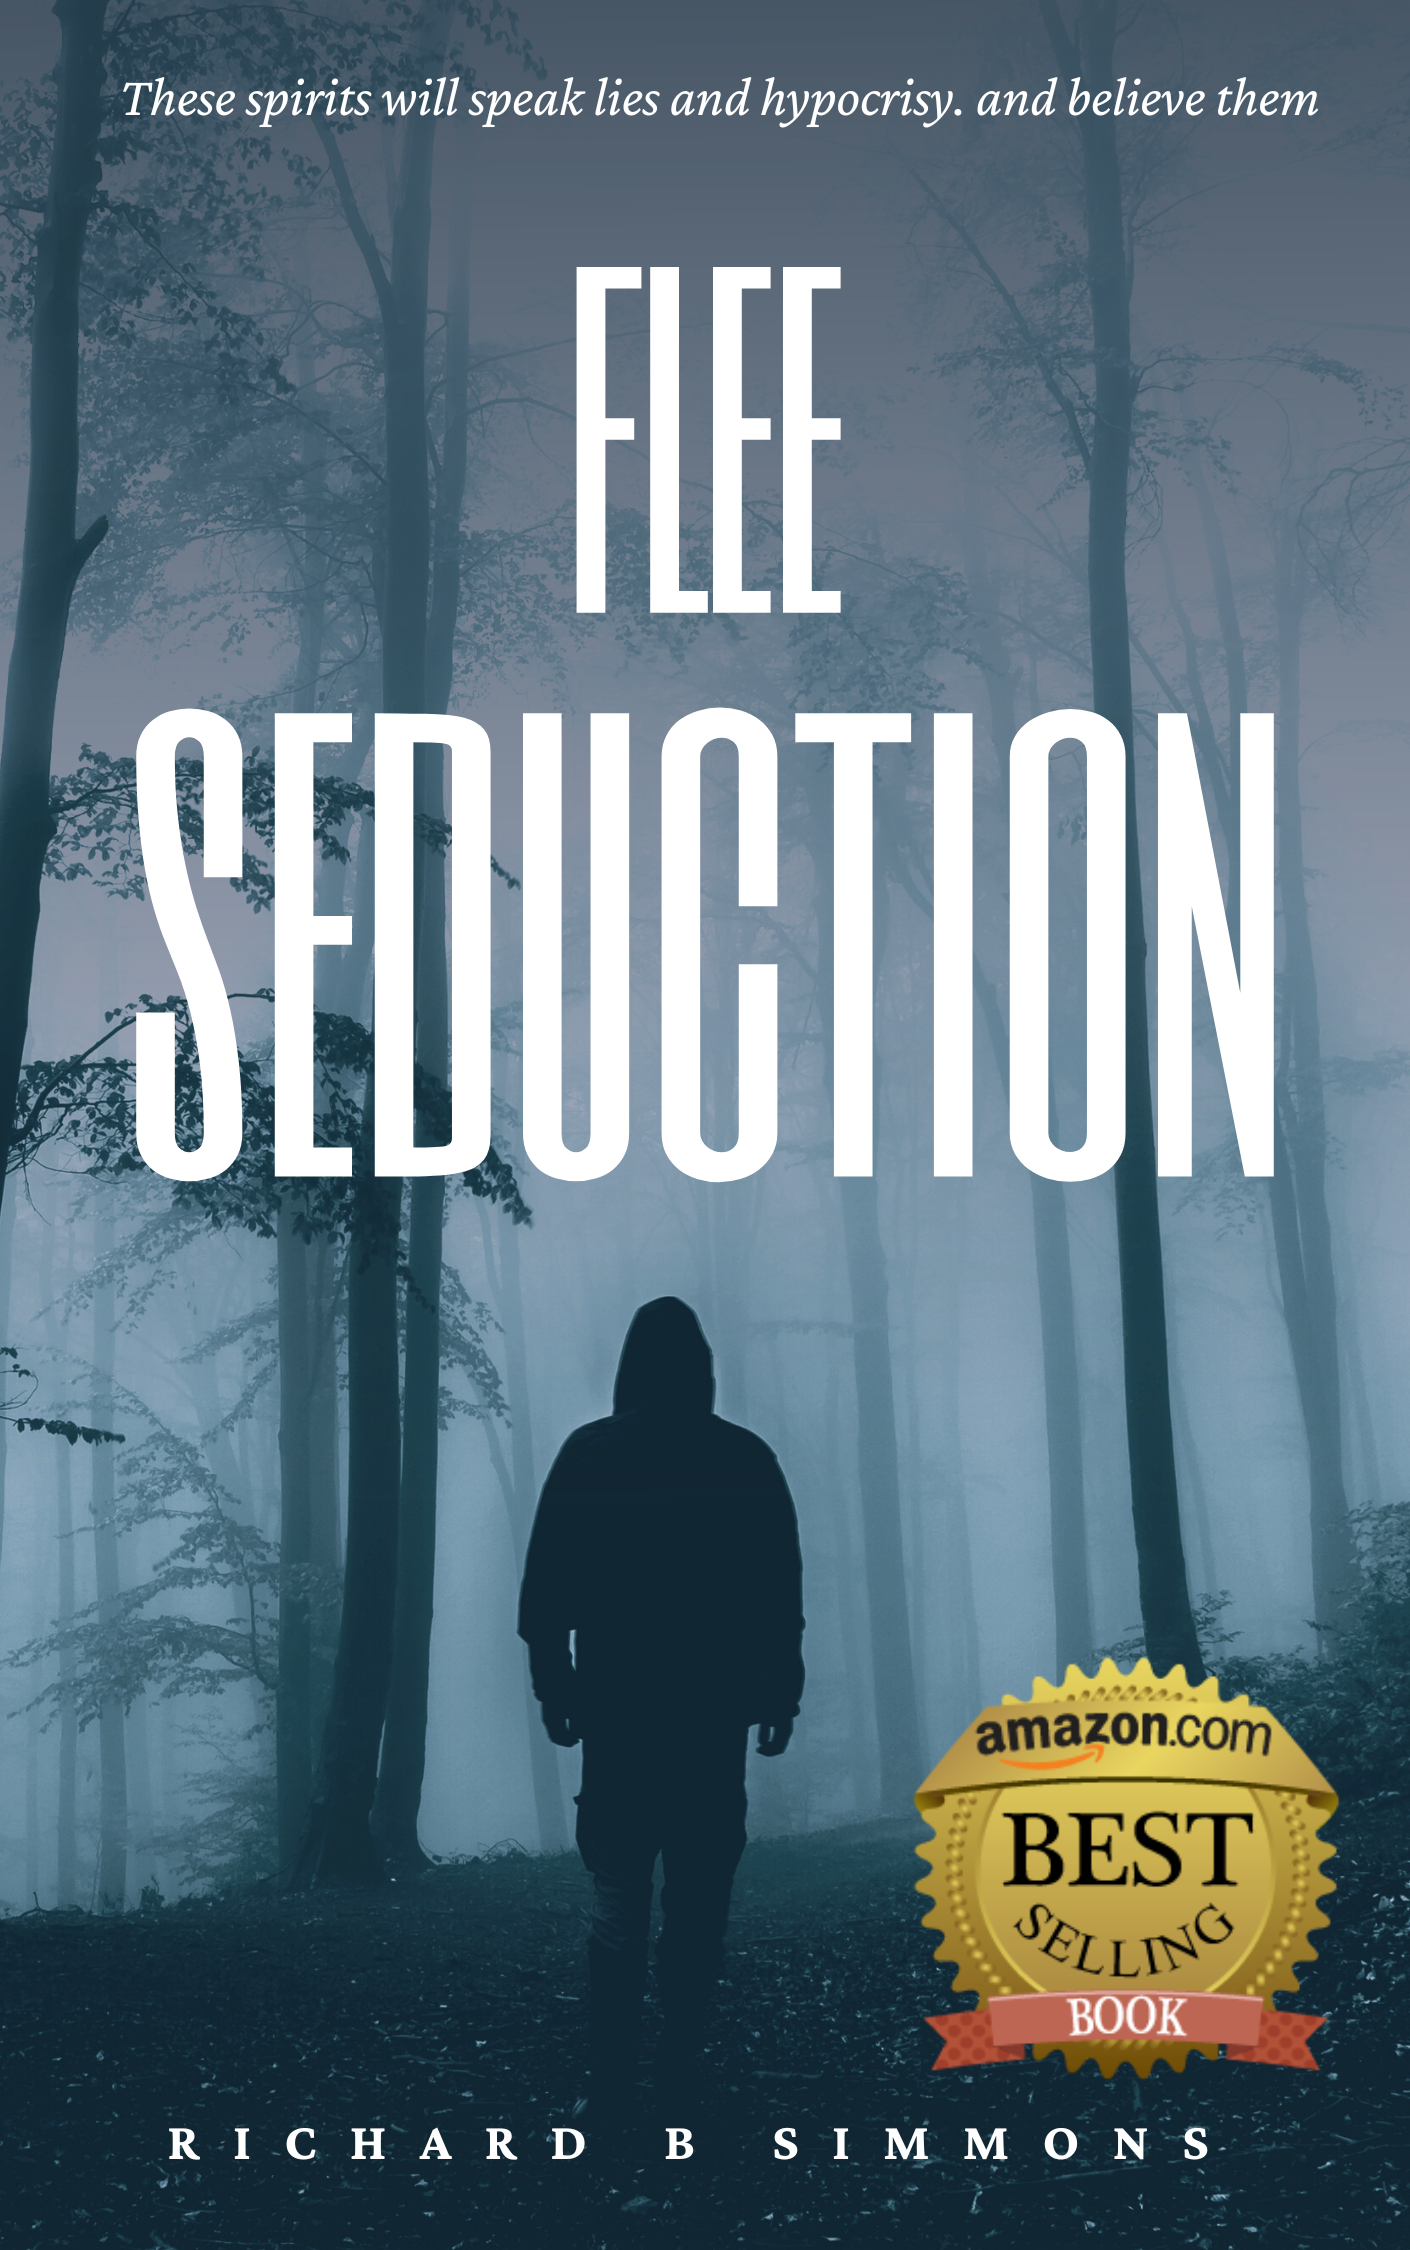 flee-seduction-book